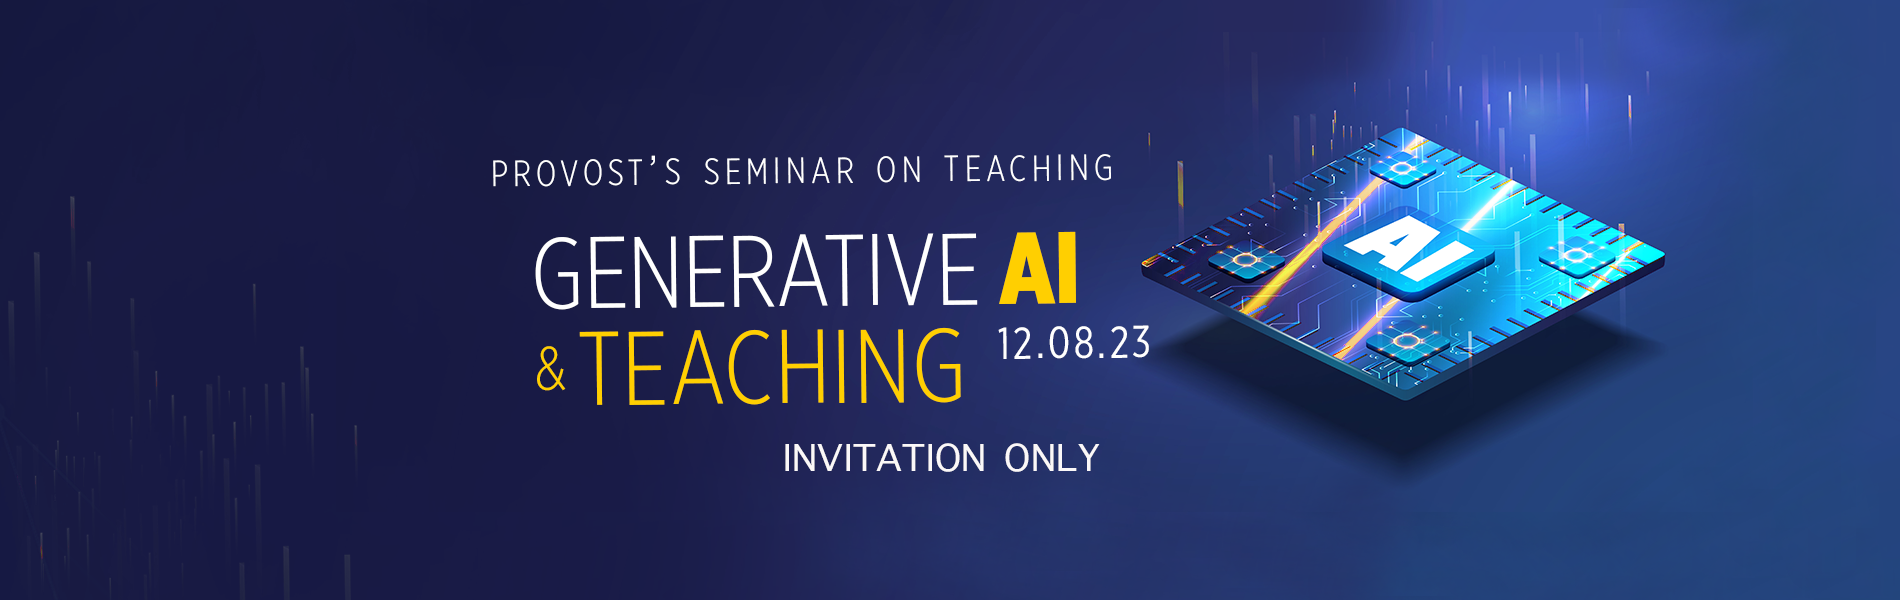 Provost's Seminar on Teaching - Generative AI & Teaching